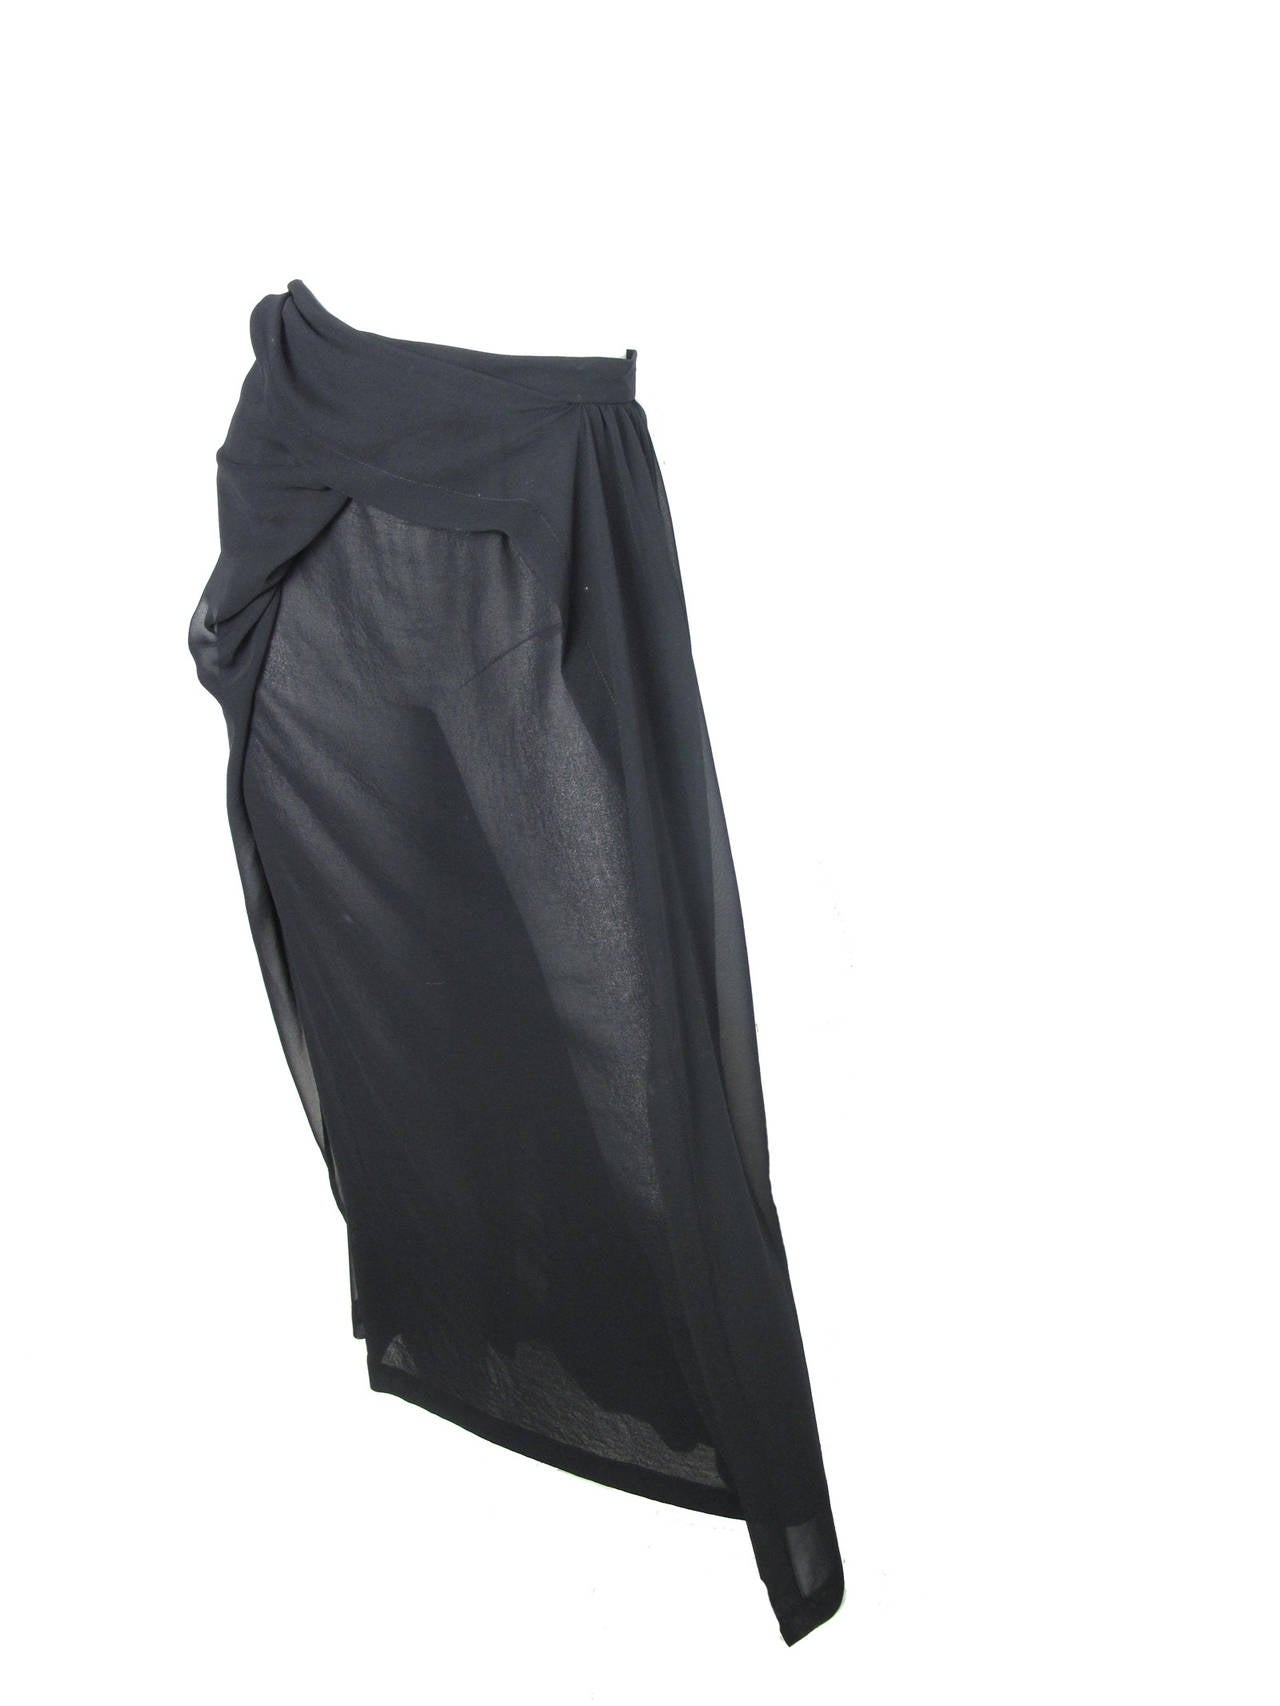 Comme des Garcons 1990s sheer asymmetrical skirt at 1stdibs